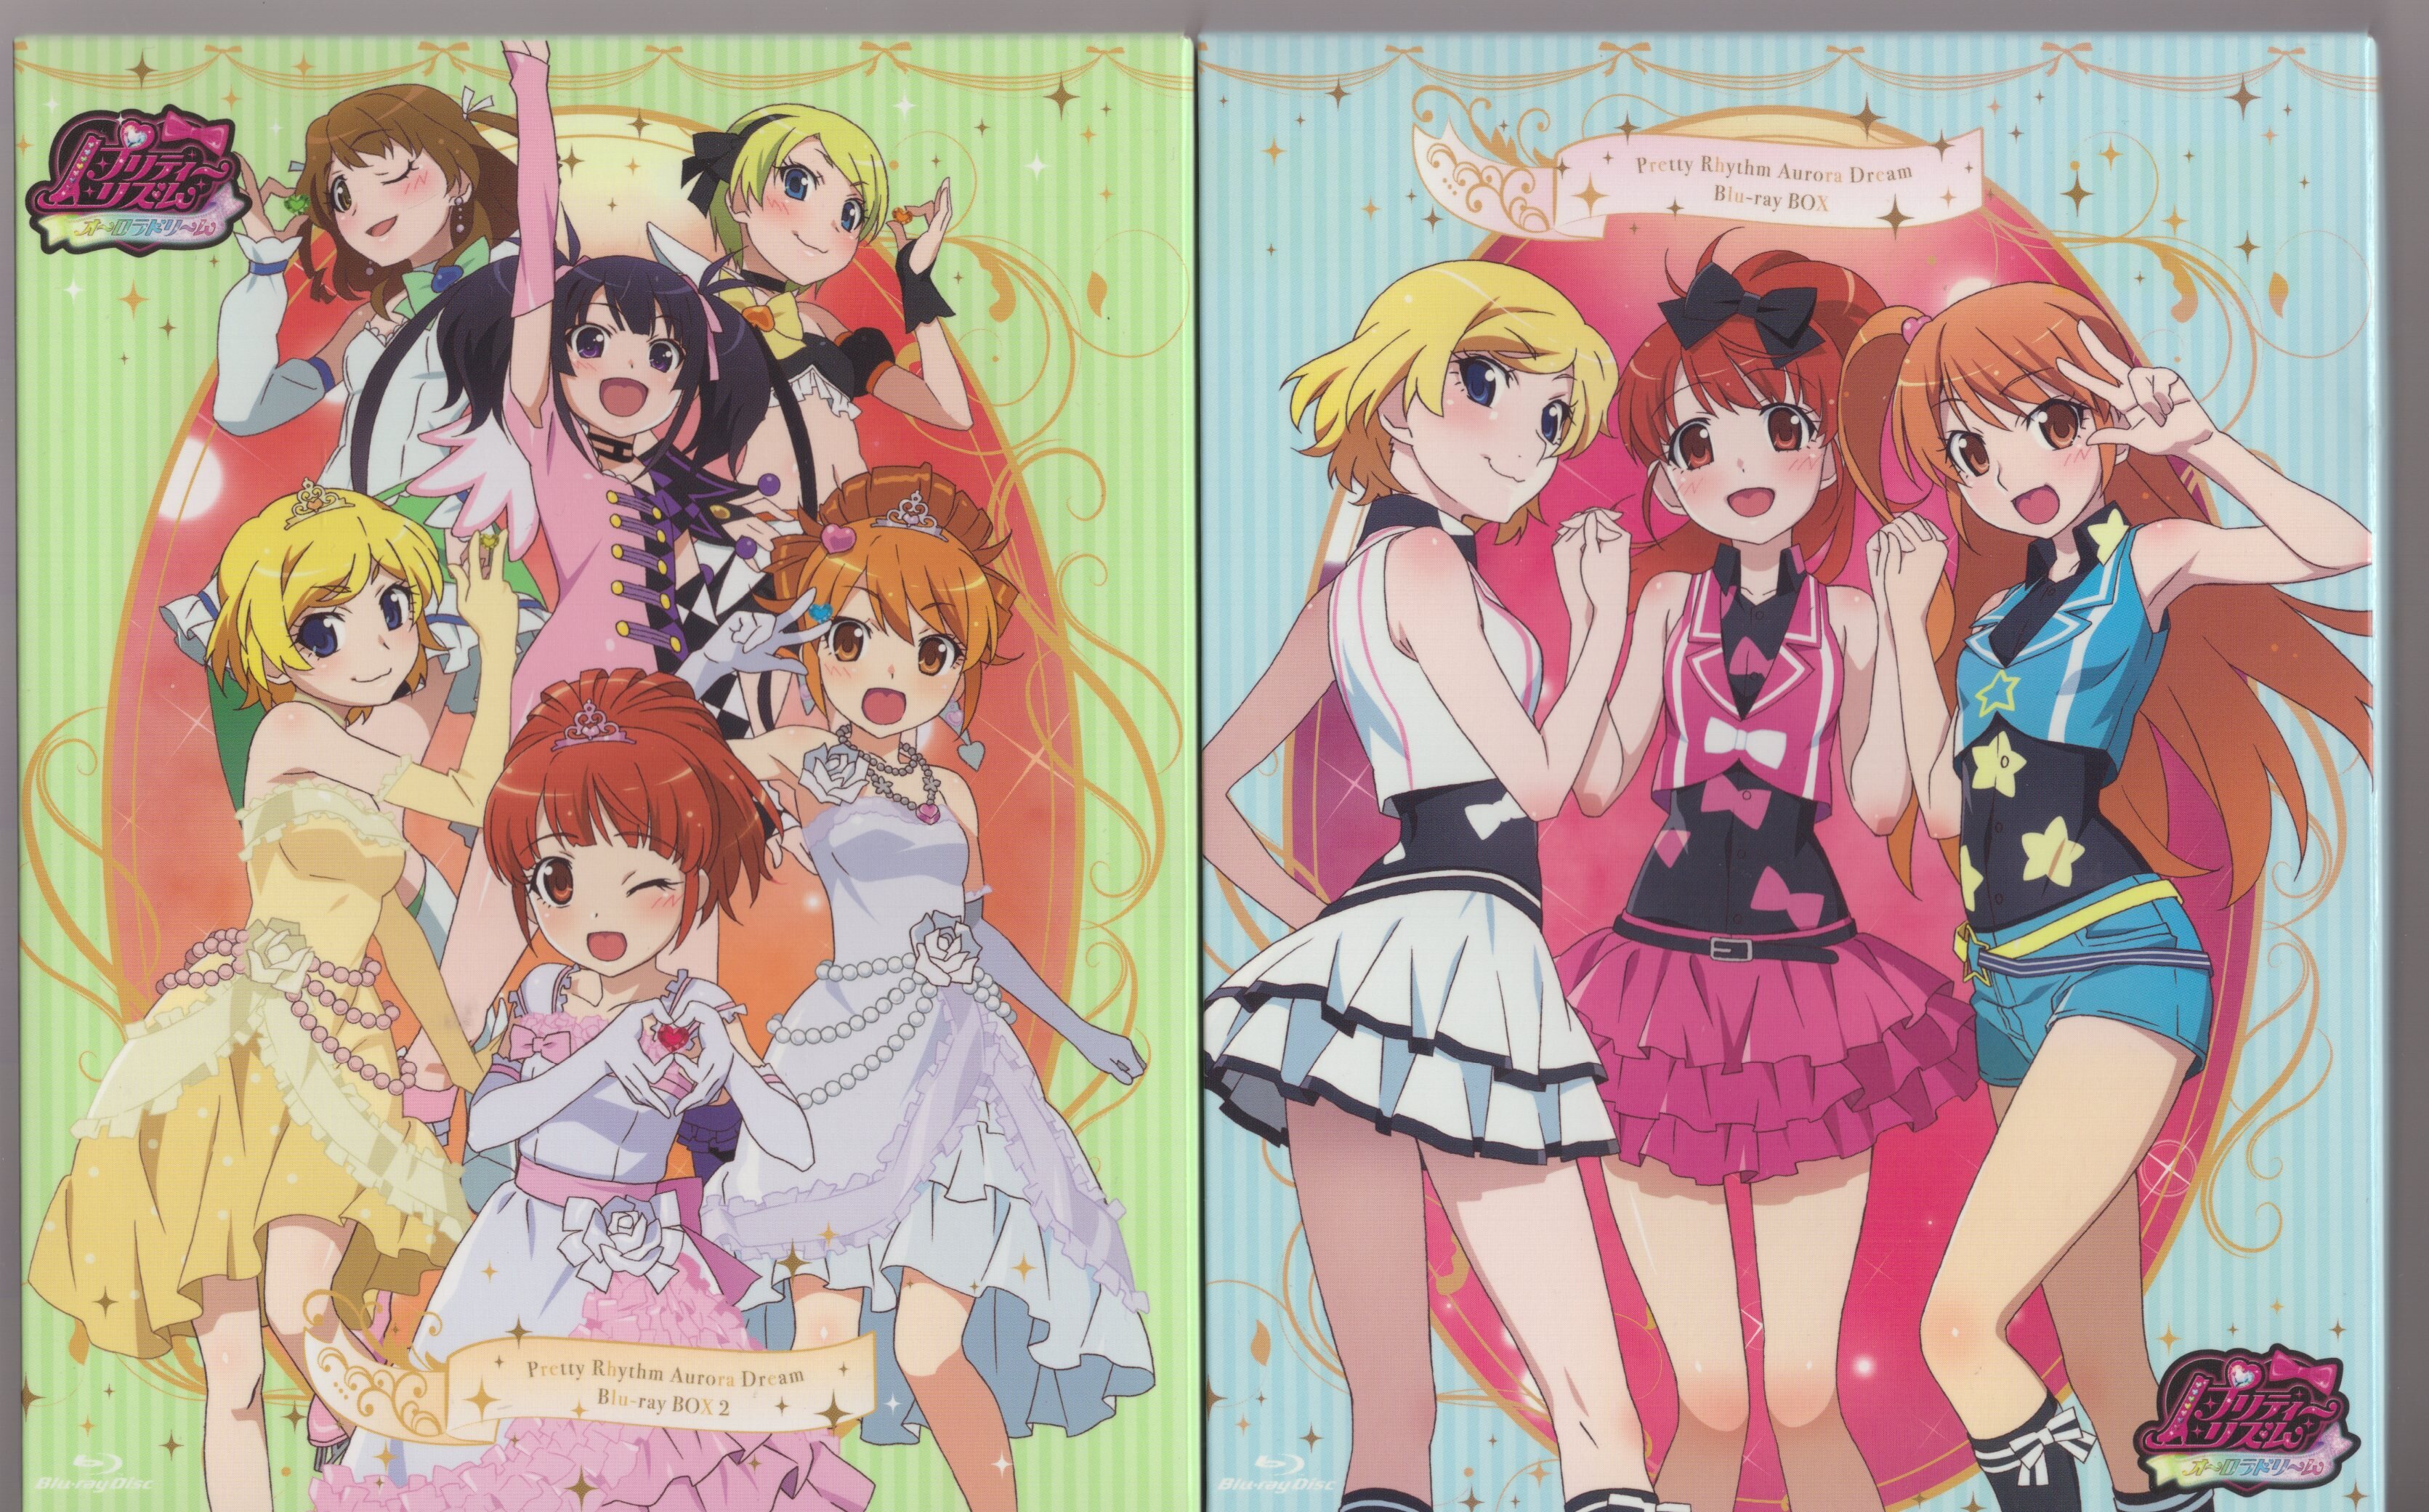 Anime Blu-ray Pretty Rhythm Aurora Dream Blu-ray BOX Complete 2 Volume set  | Mandarake Online Shop